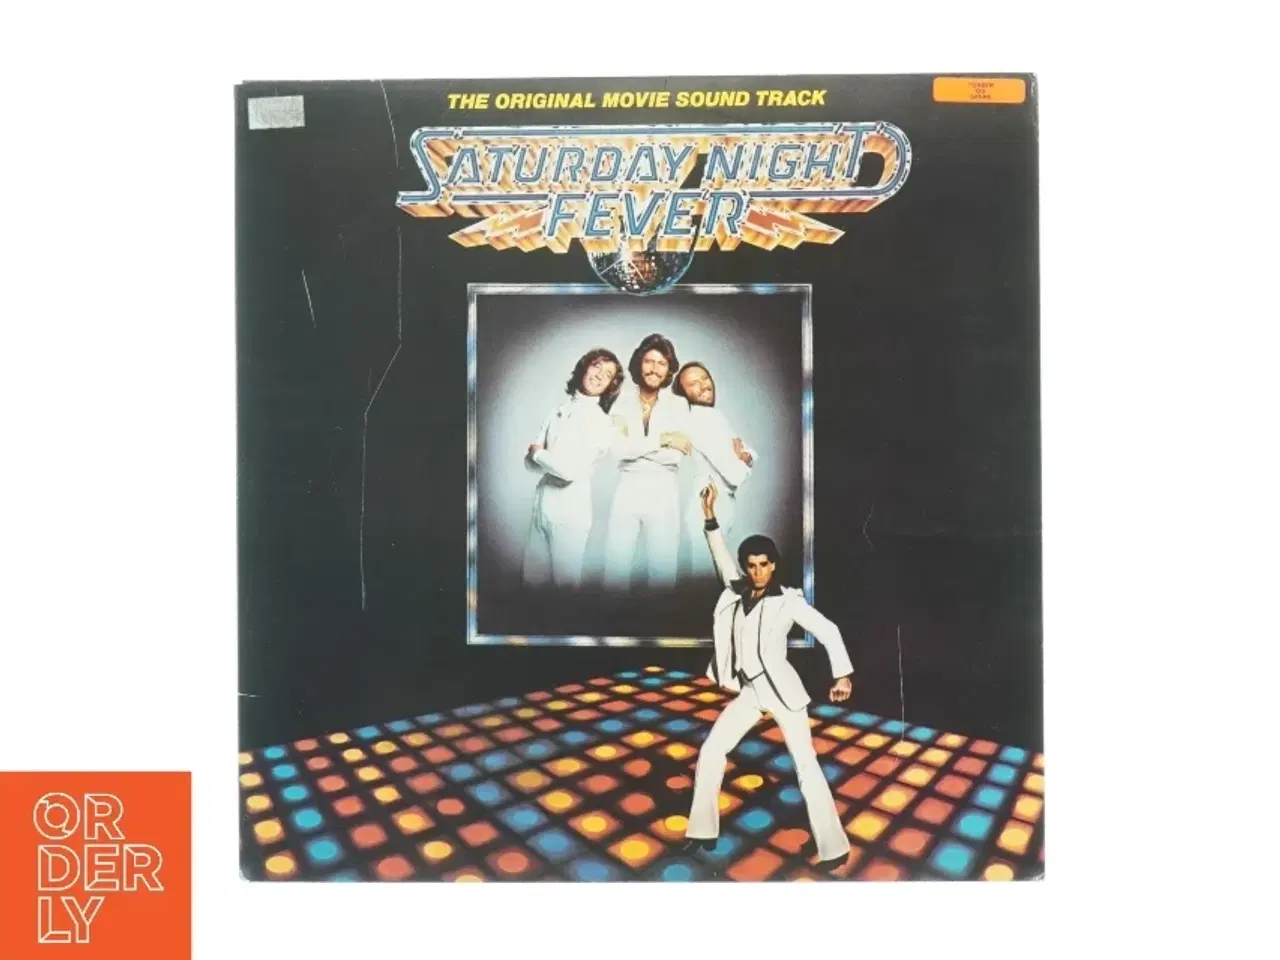 Billede 1 - Bee Gees 'Saturday Night Fever' fra RSO (str. 31 x 31 cm)